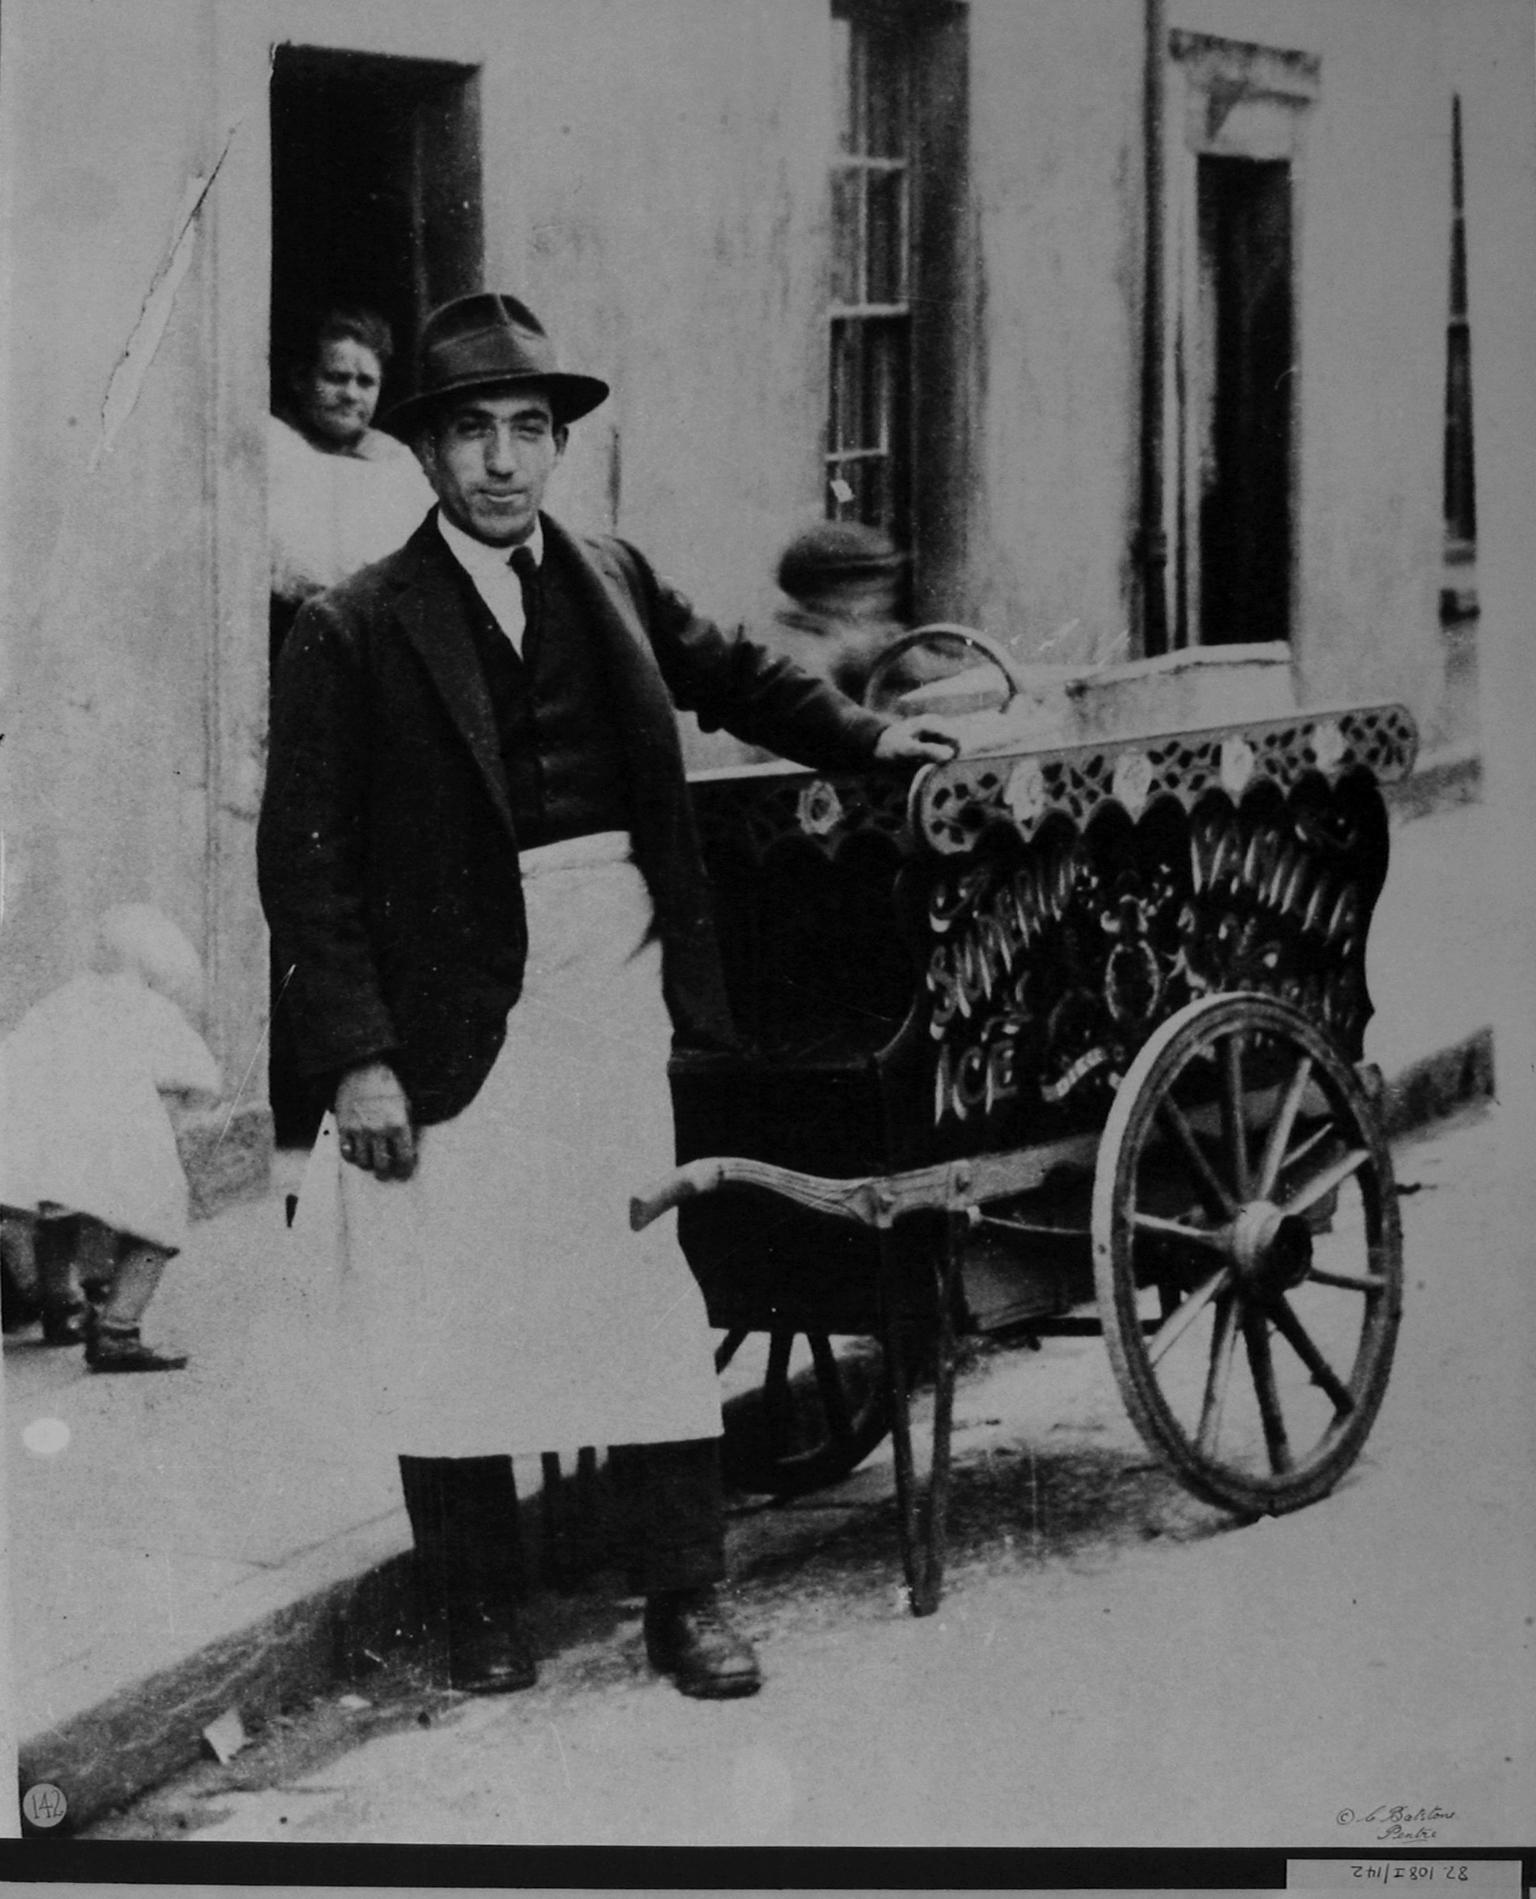 Ice cream vendor, photograph